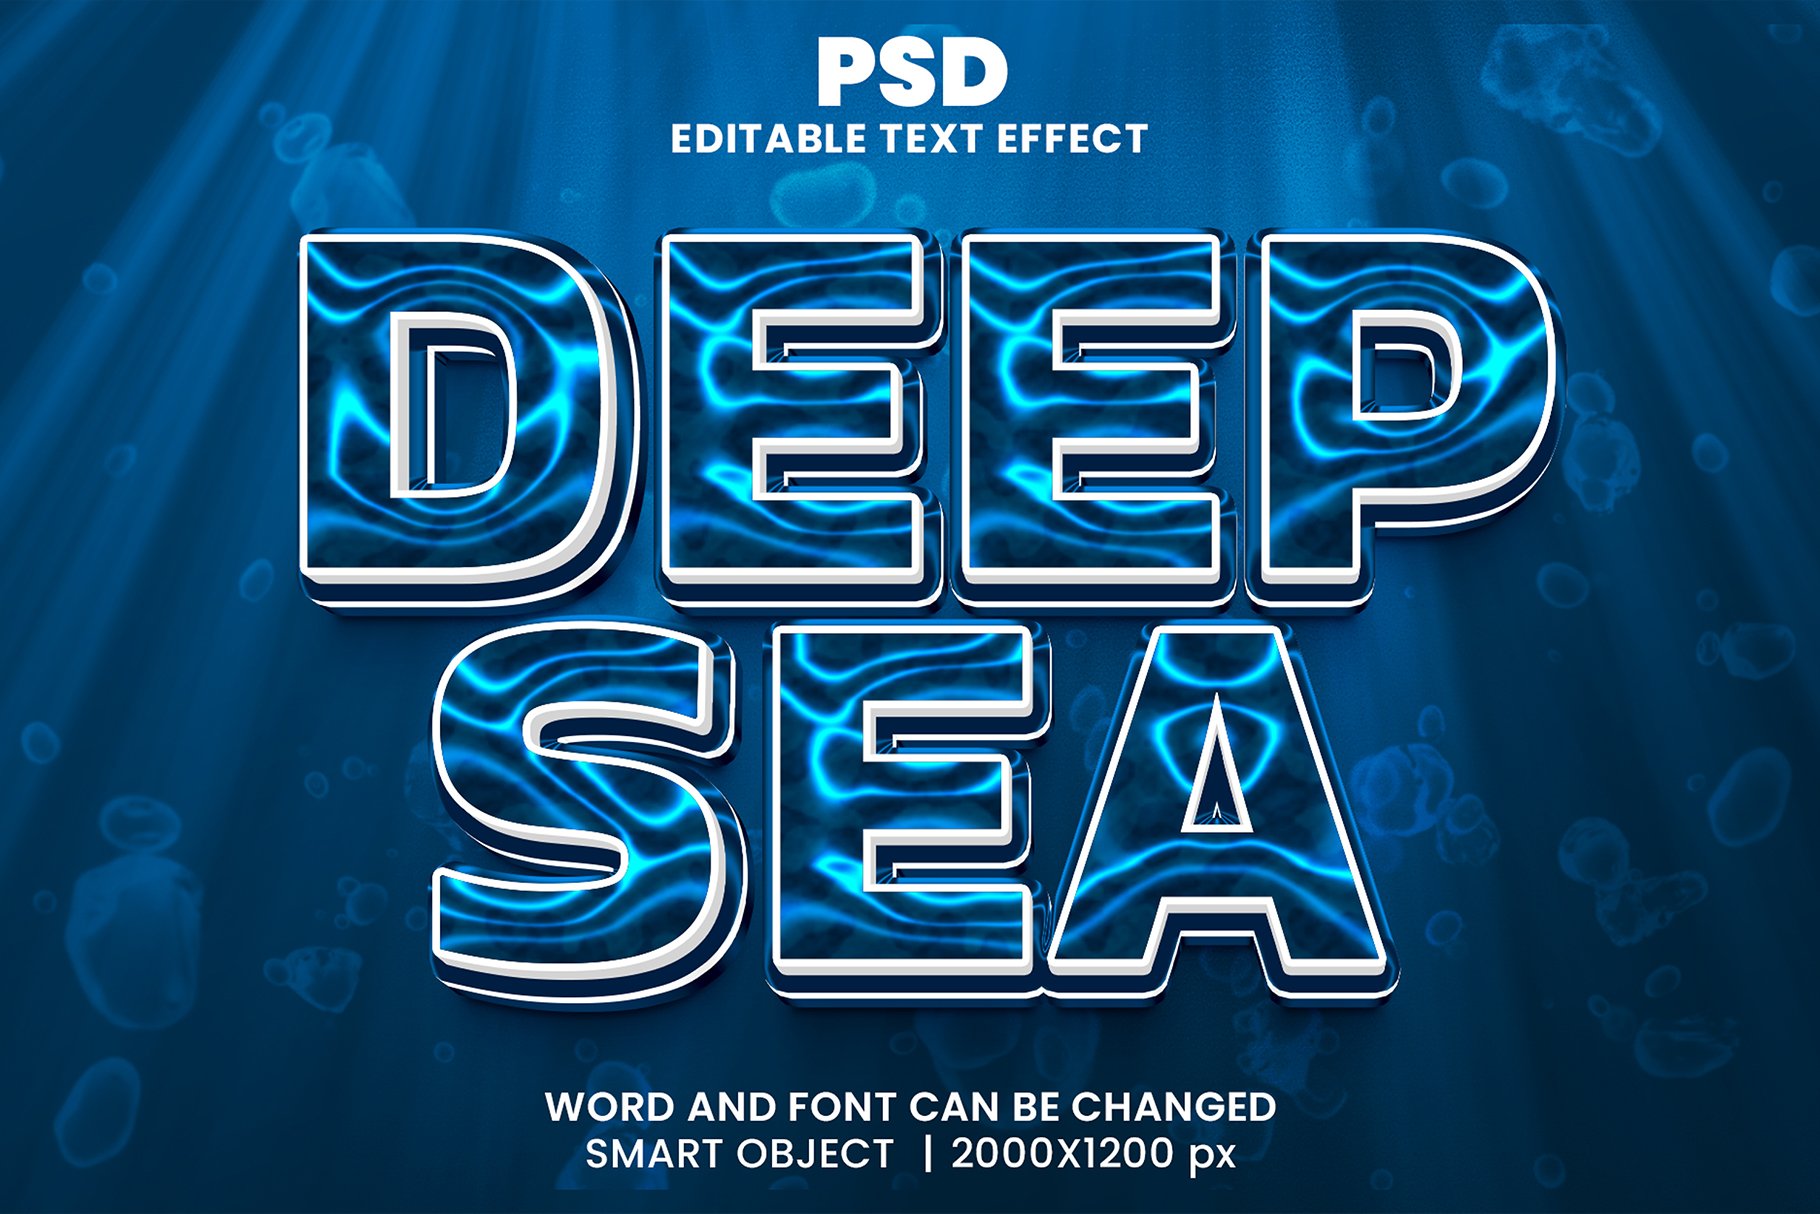 Deep sea 3D Text Effect Stylecover image.